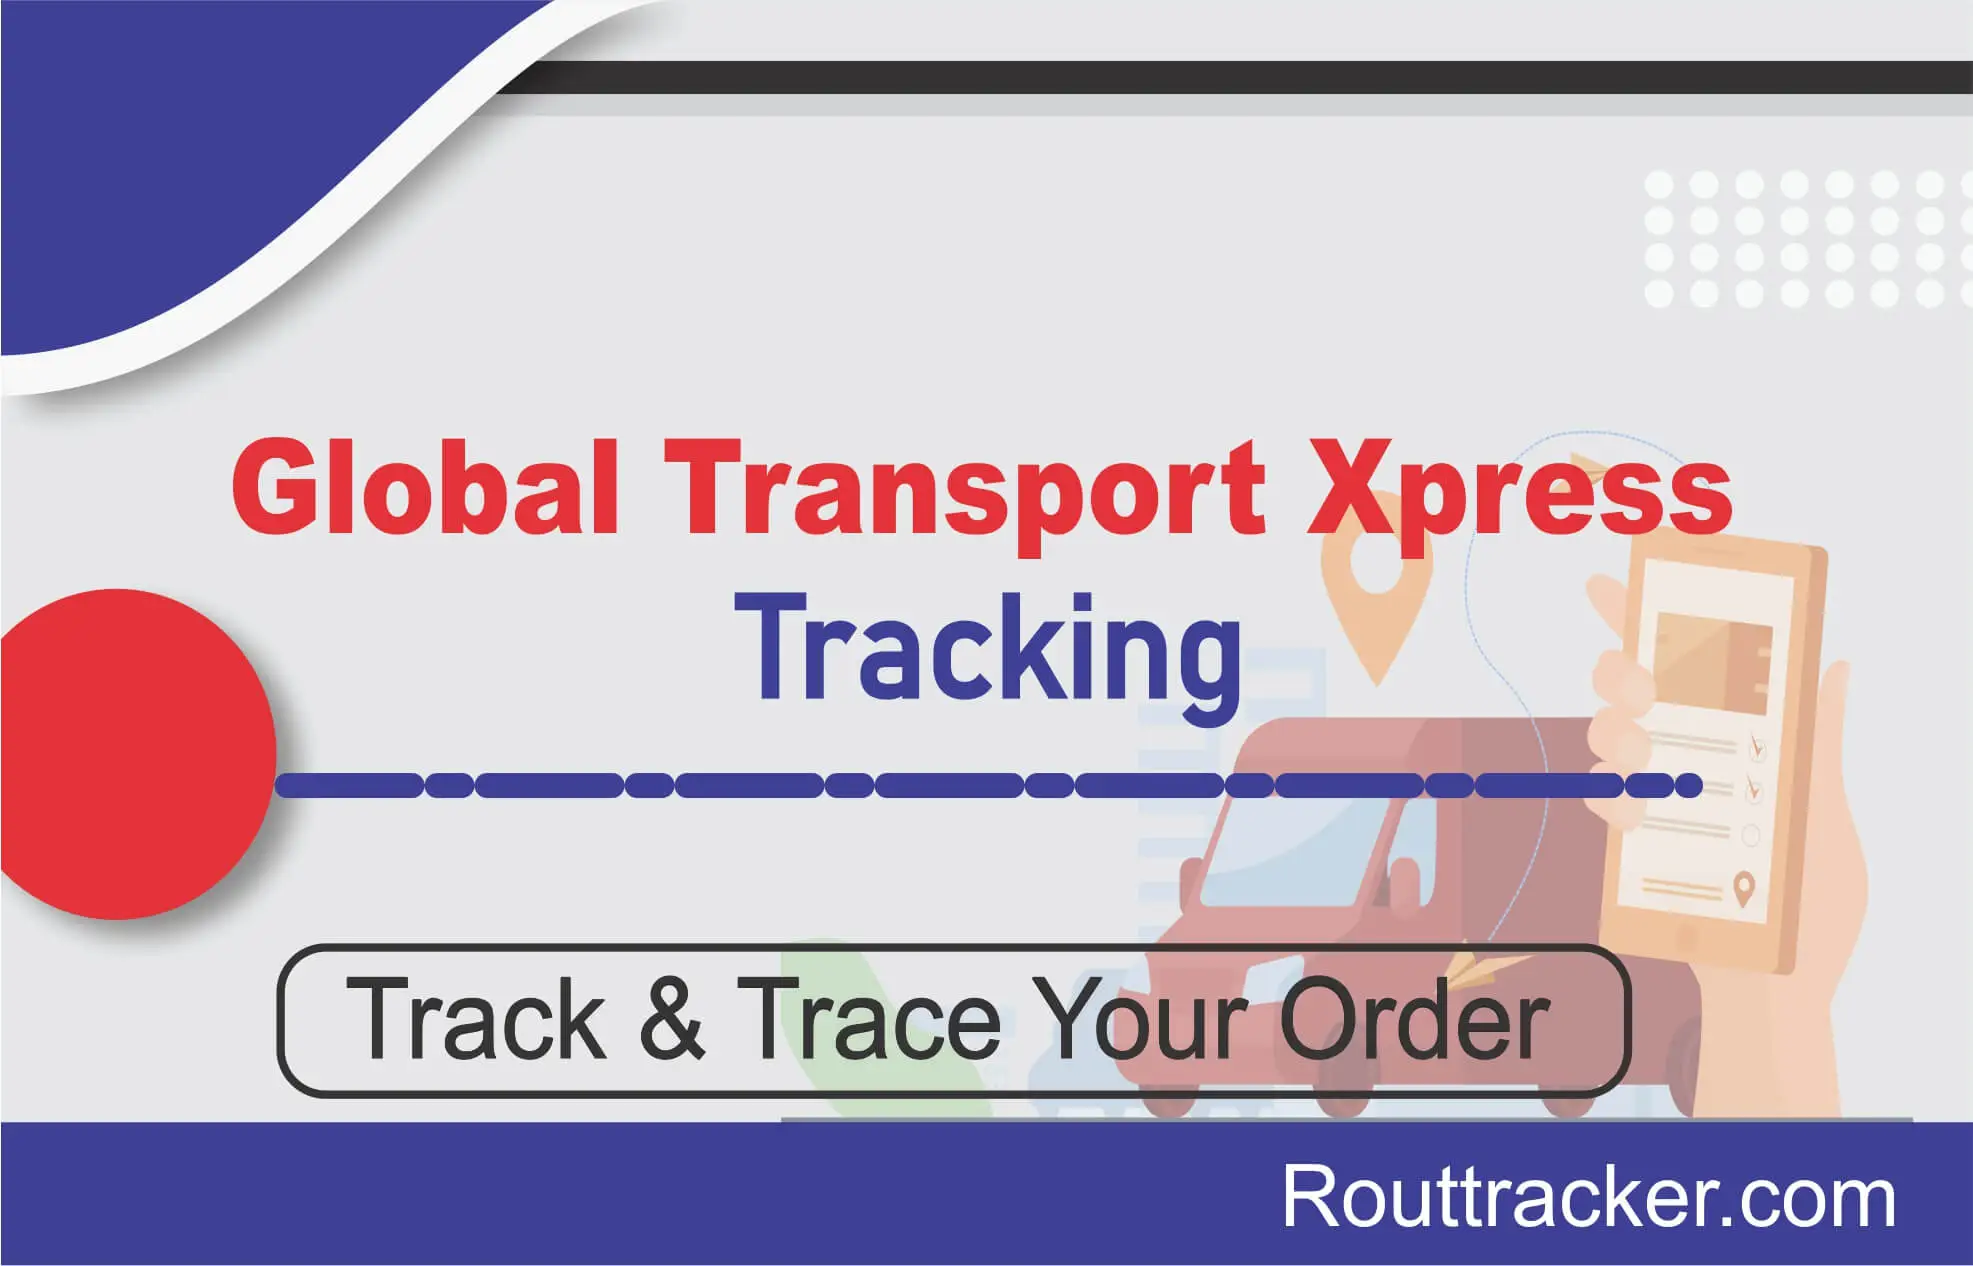 Global Transport Xpress Tracking